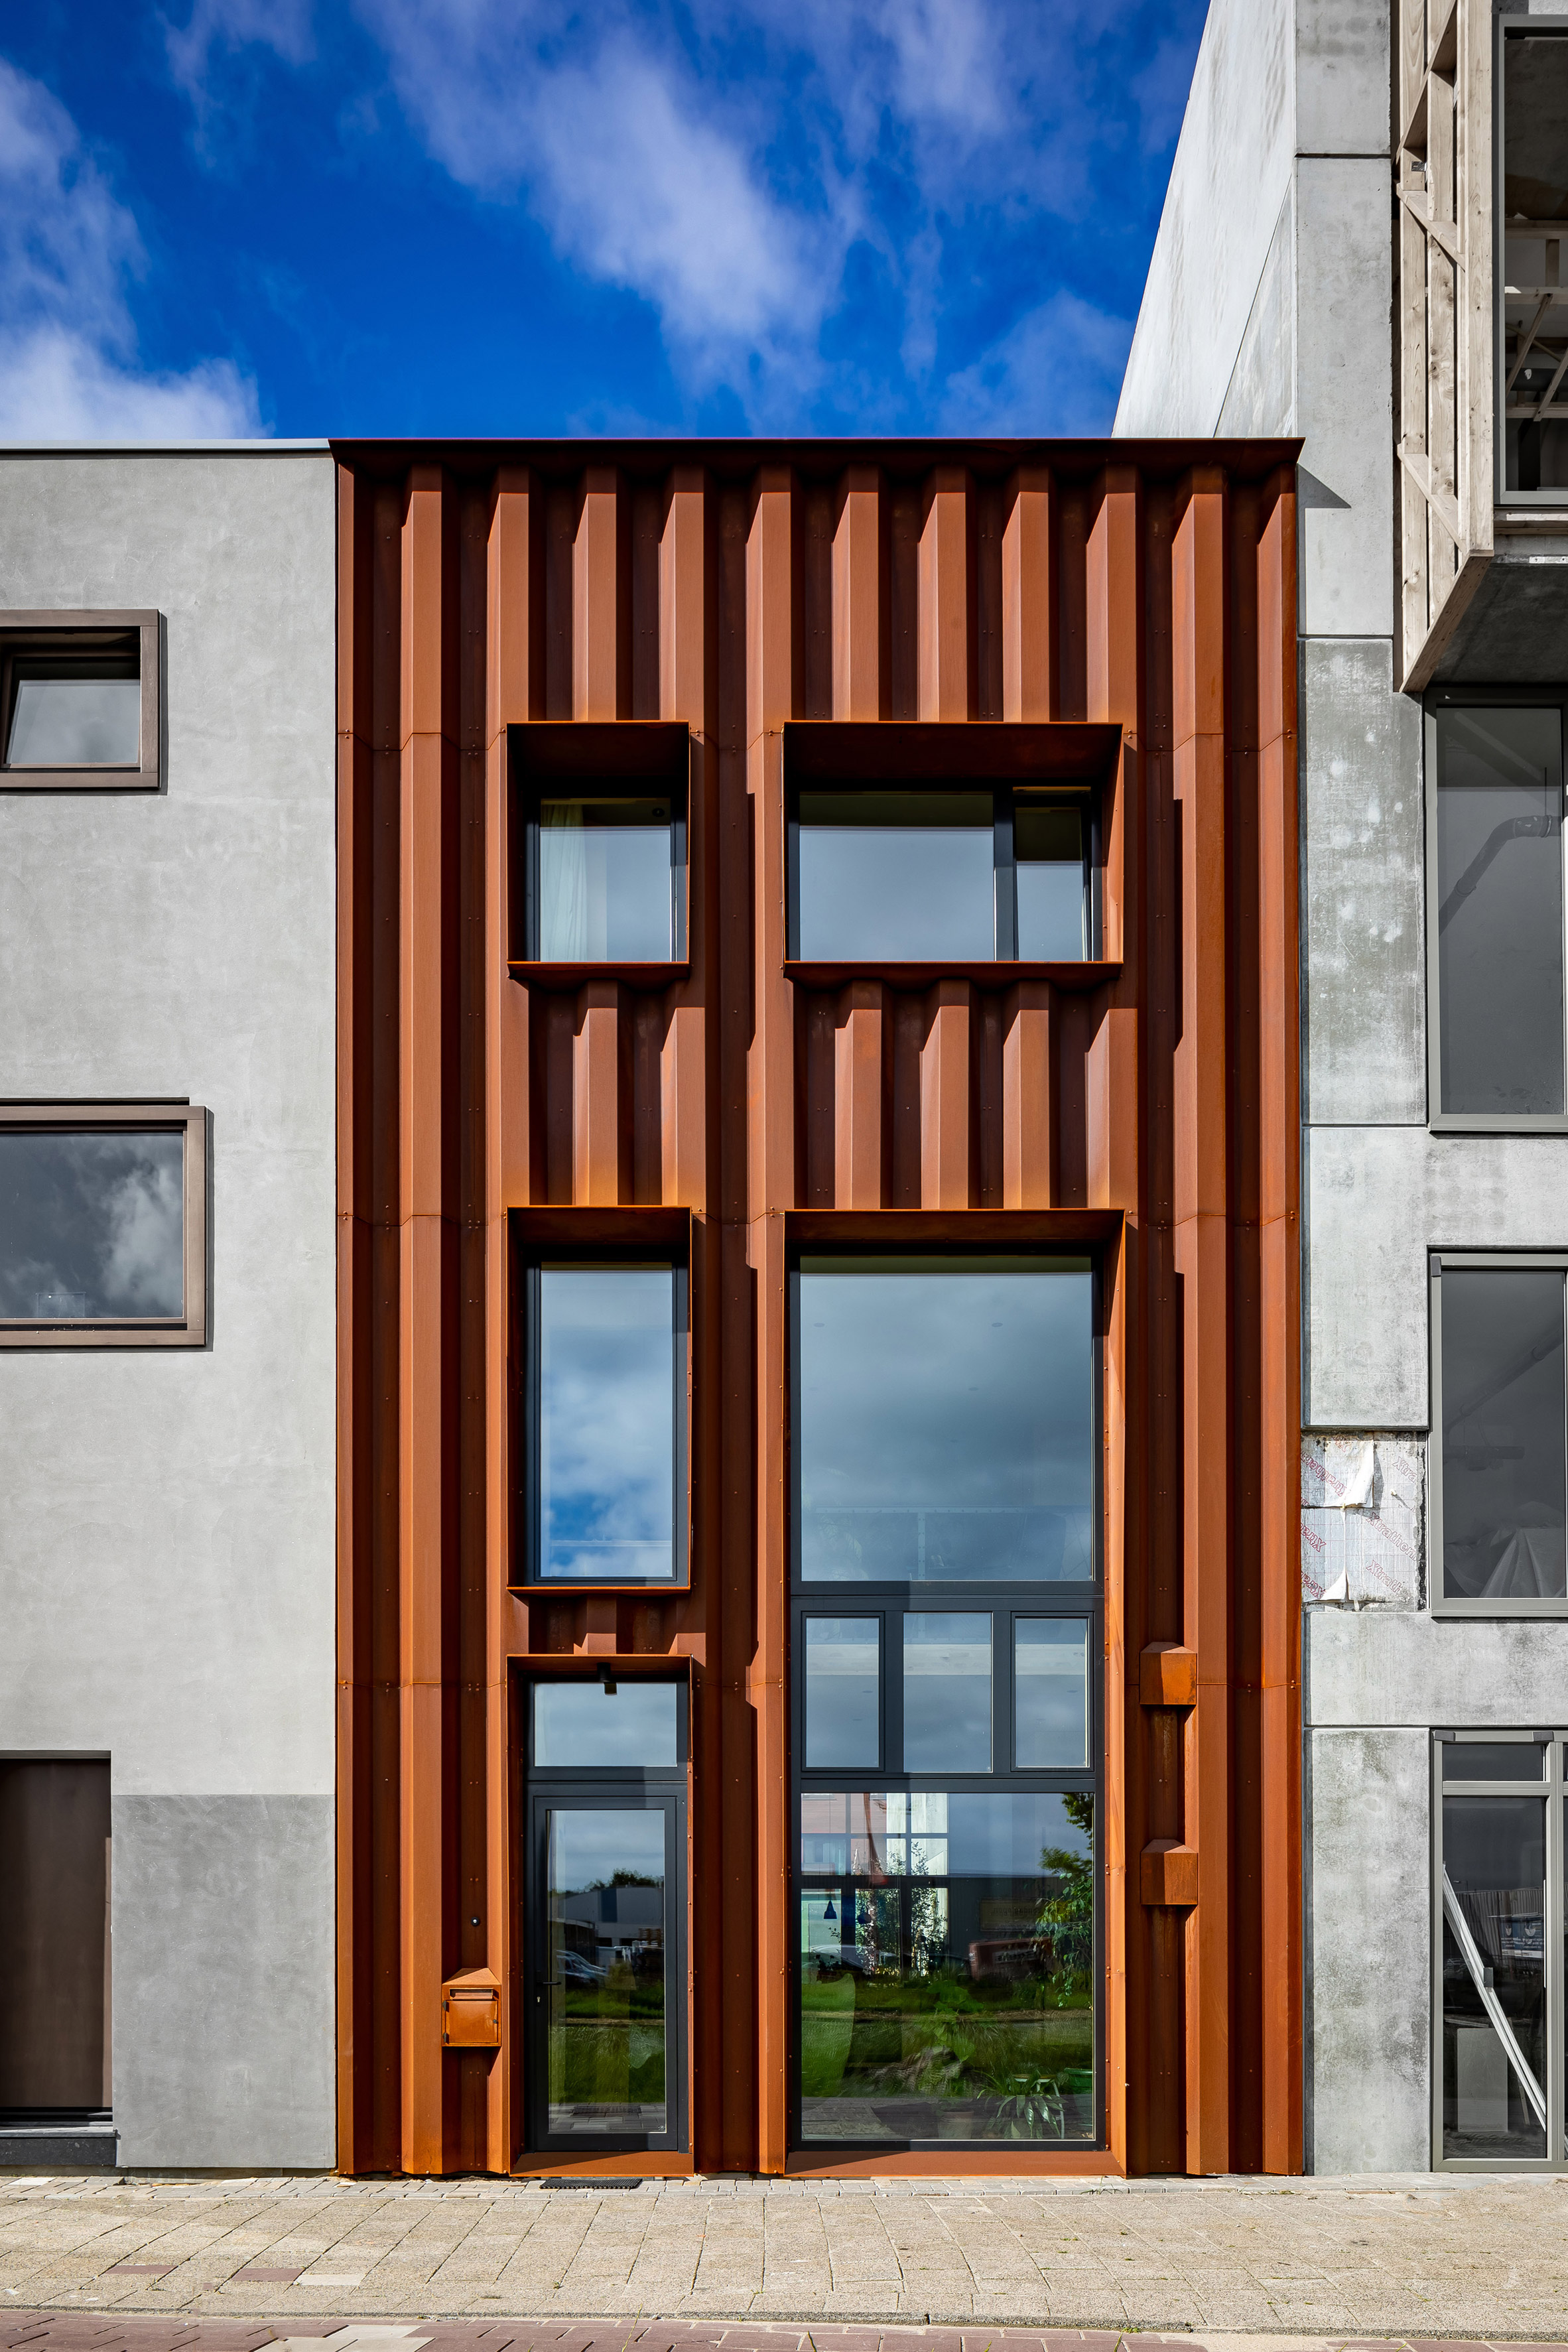 Amsterdam Buiksloterham by Fem Architects